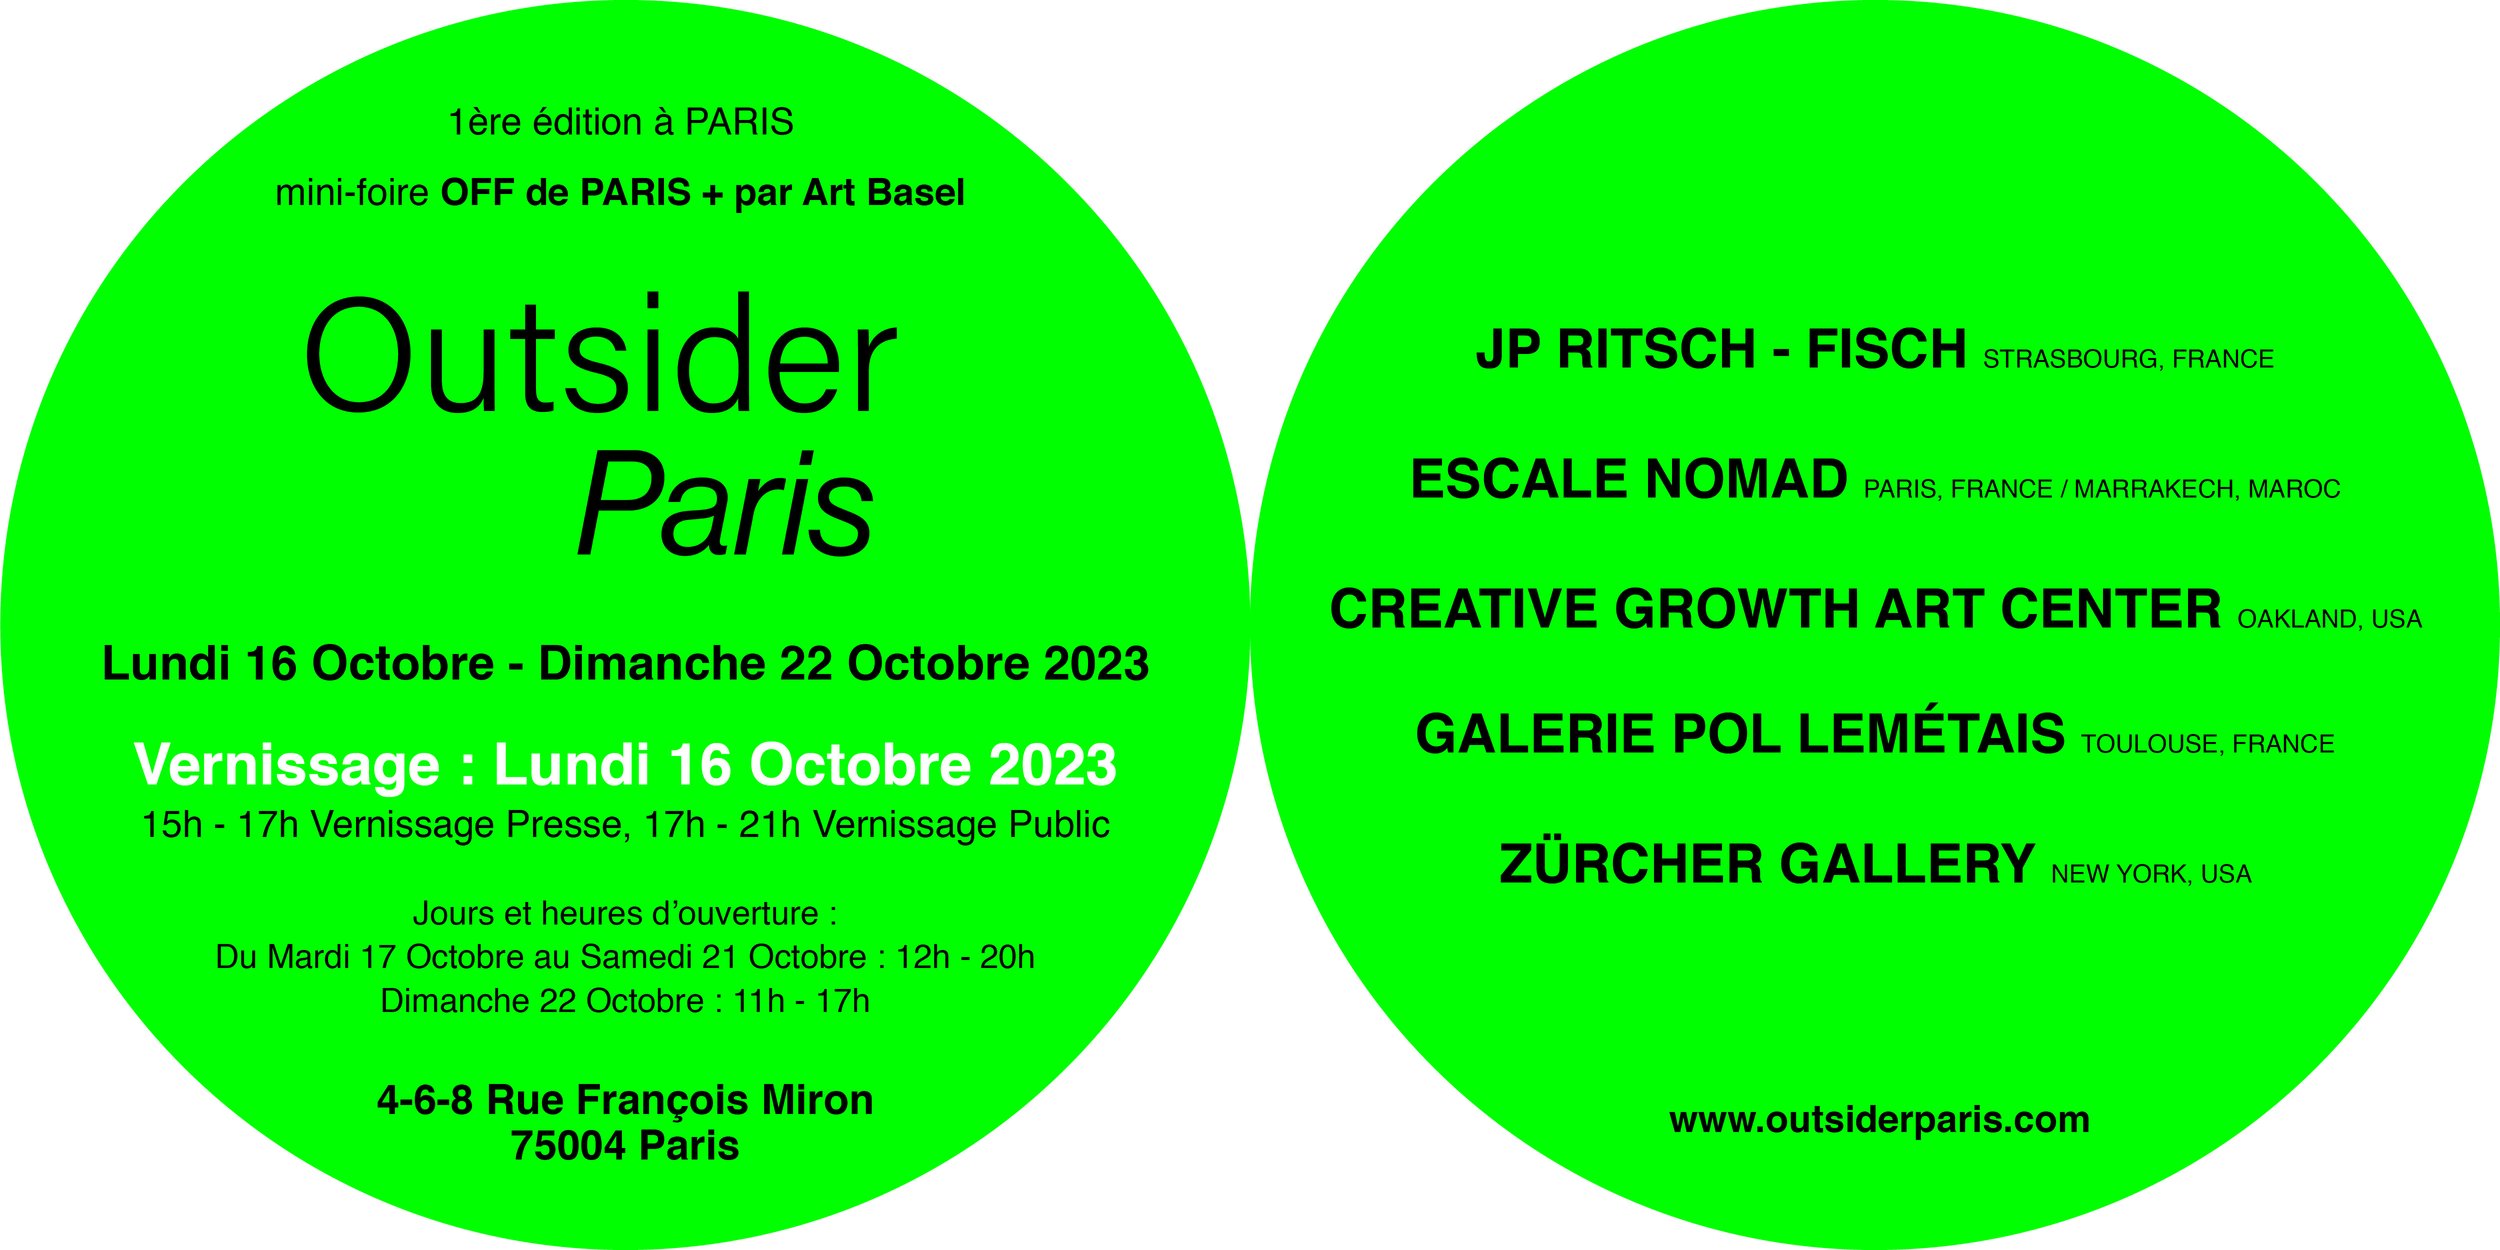 Outsider Paris Green Circles.jpg